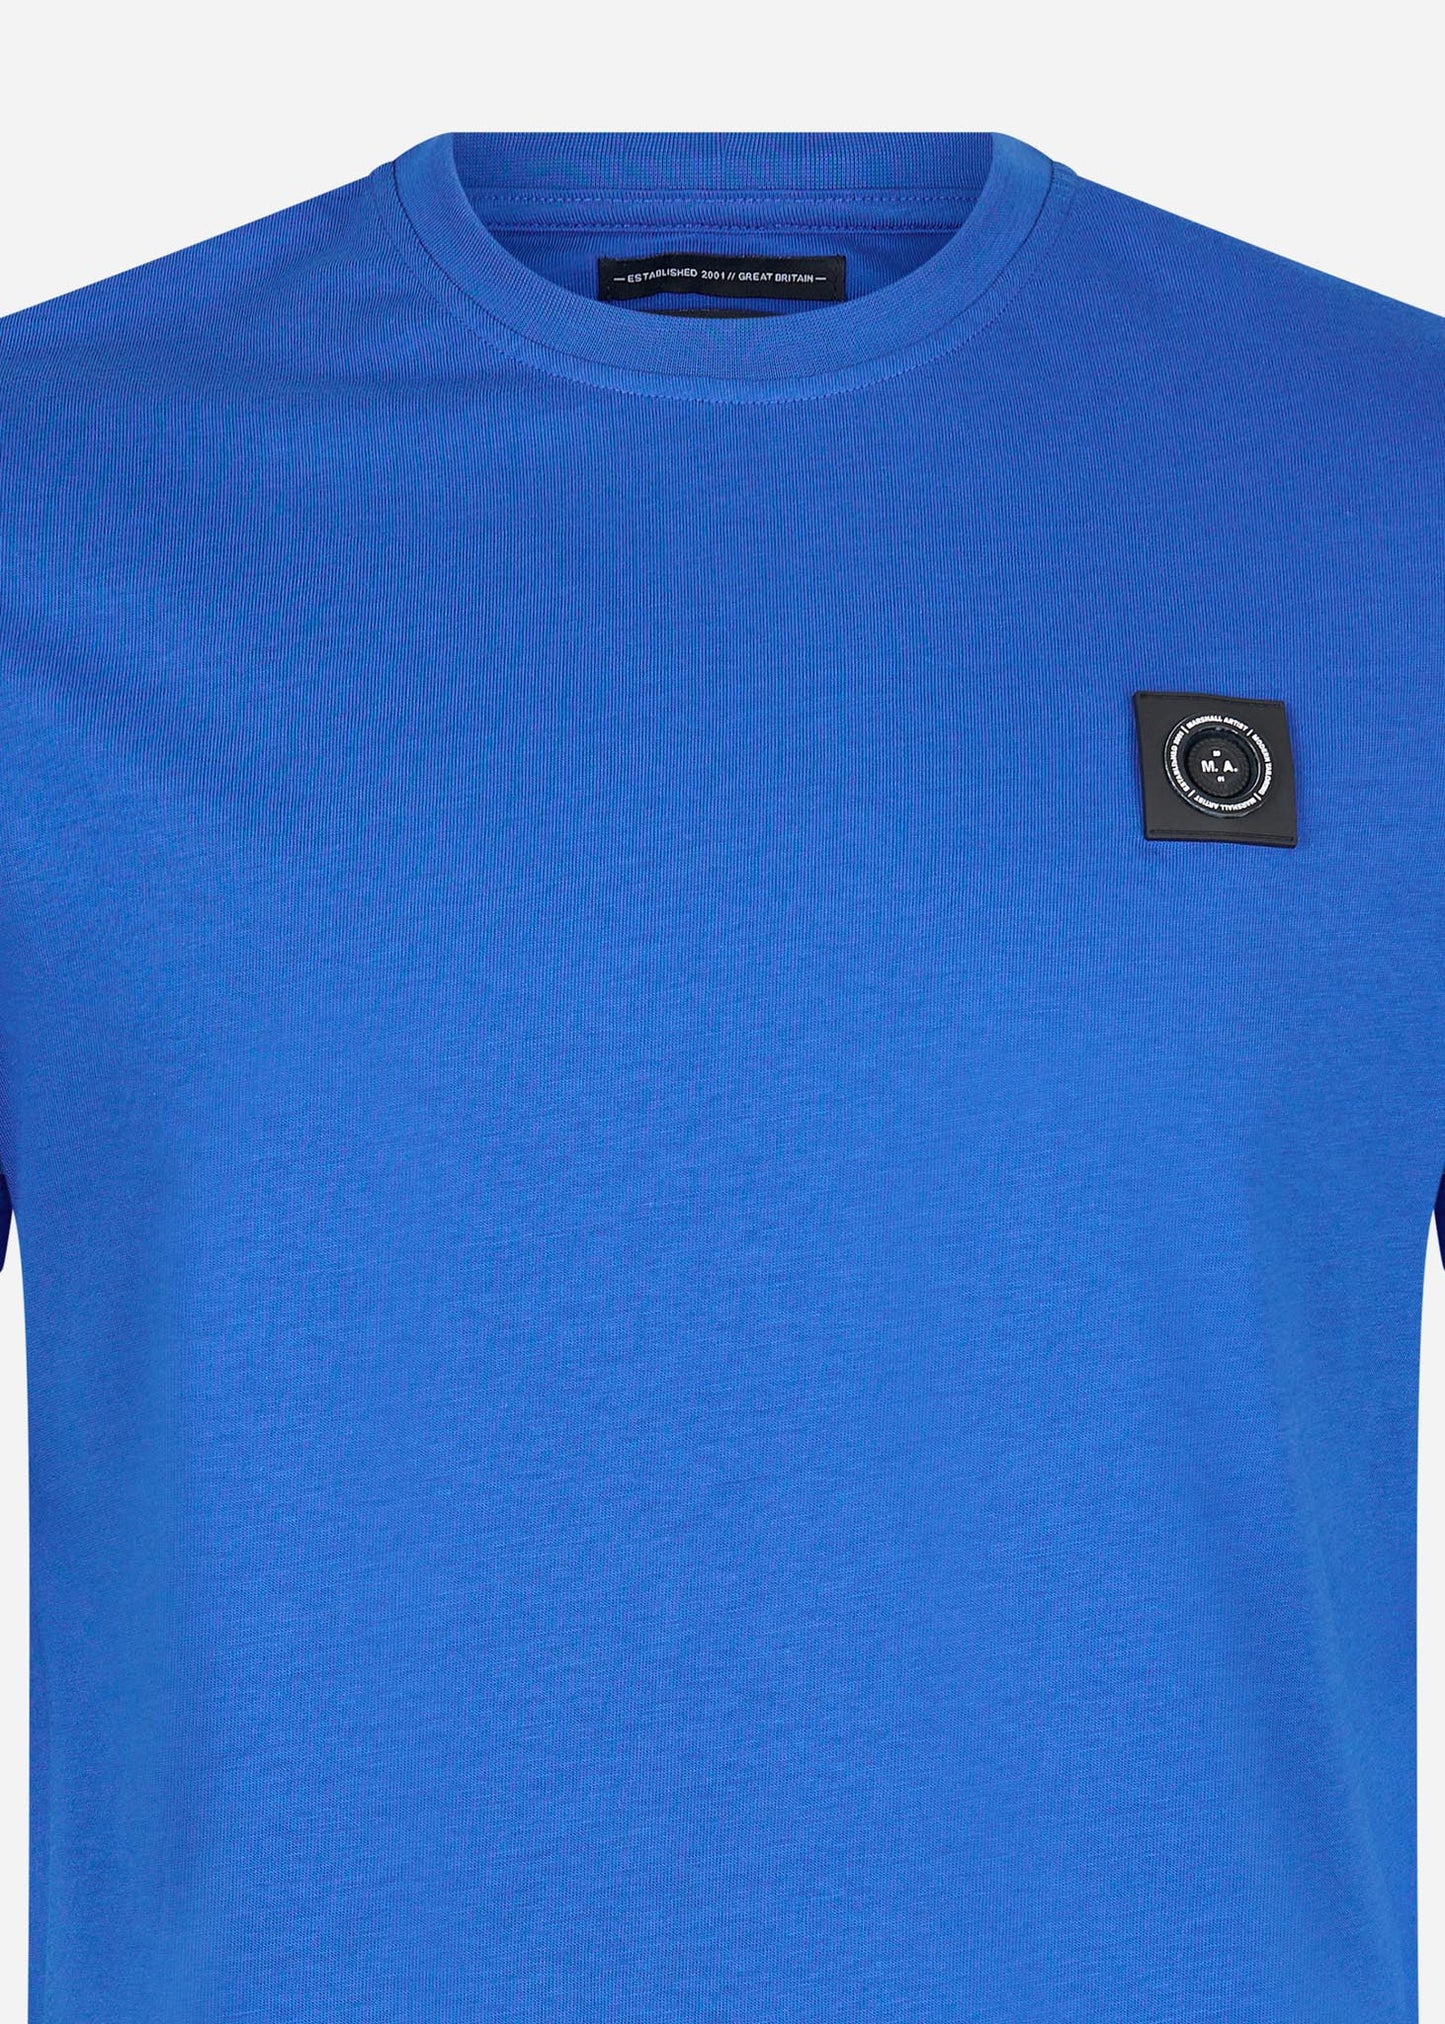 Siren t-shirt - radial blue